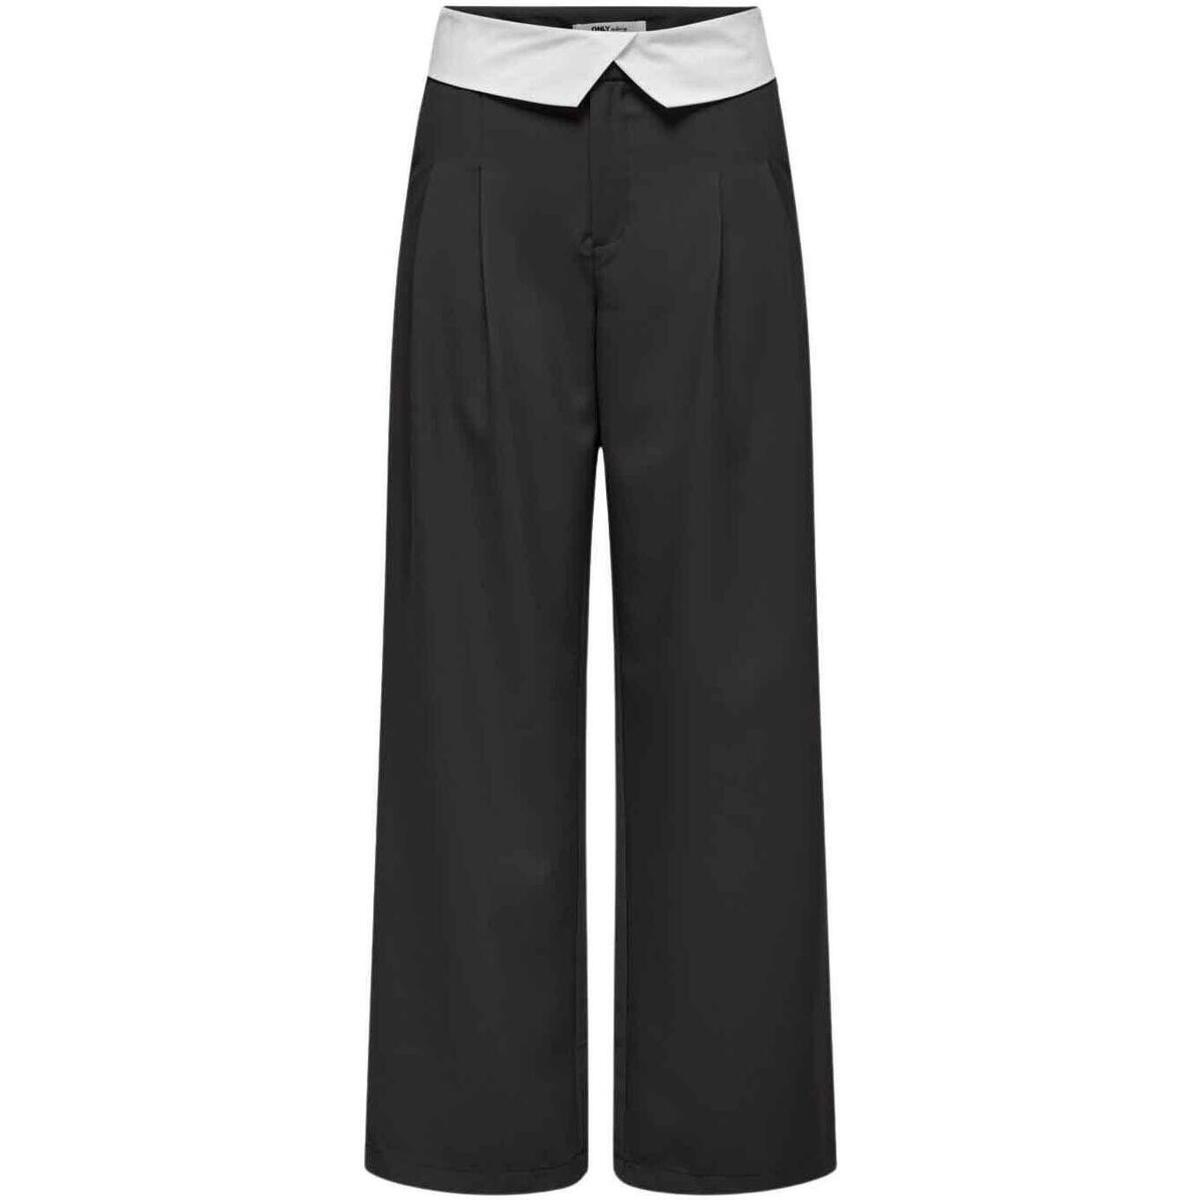 Textiel Broeken / Pantalons Only  Zwart